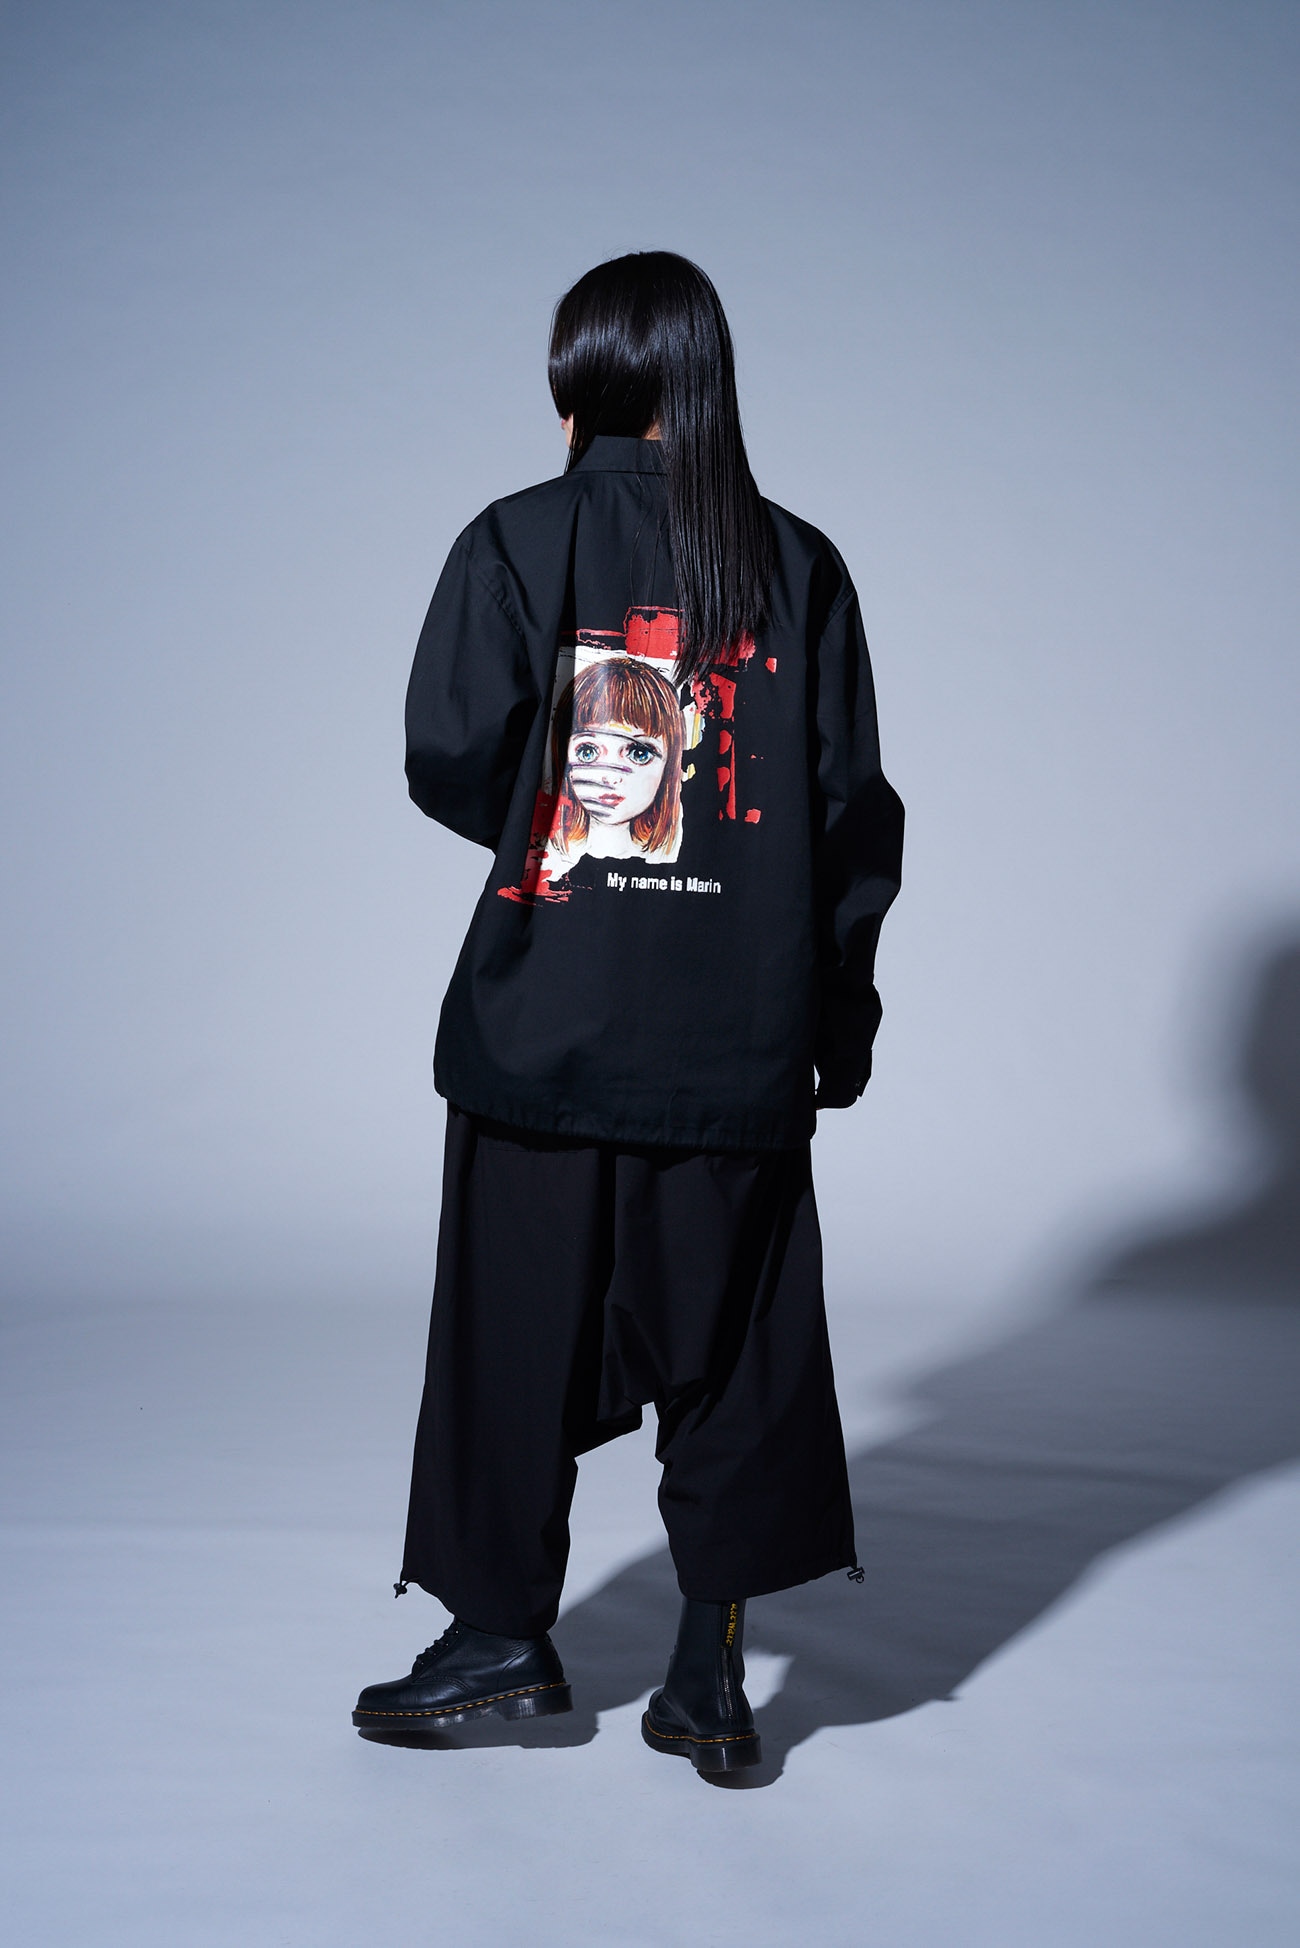 S'YTExKAZUO UMEZZ T/C WEATHER CLOTH COACH JACKET PRINTED WITH ARTWORK FEATURING ZOKU-SHINGO-HAND PRINTS-